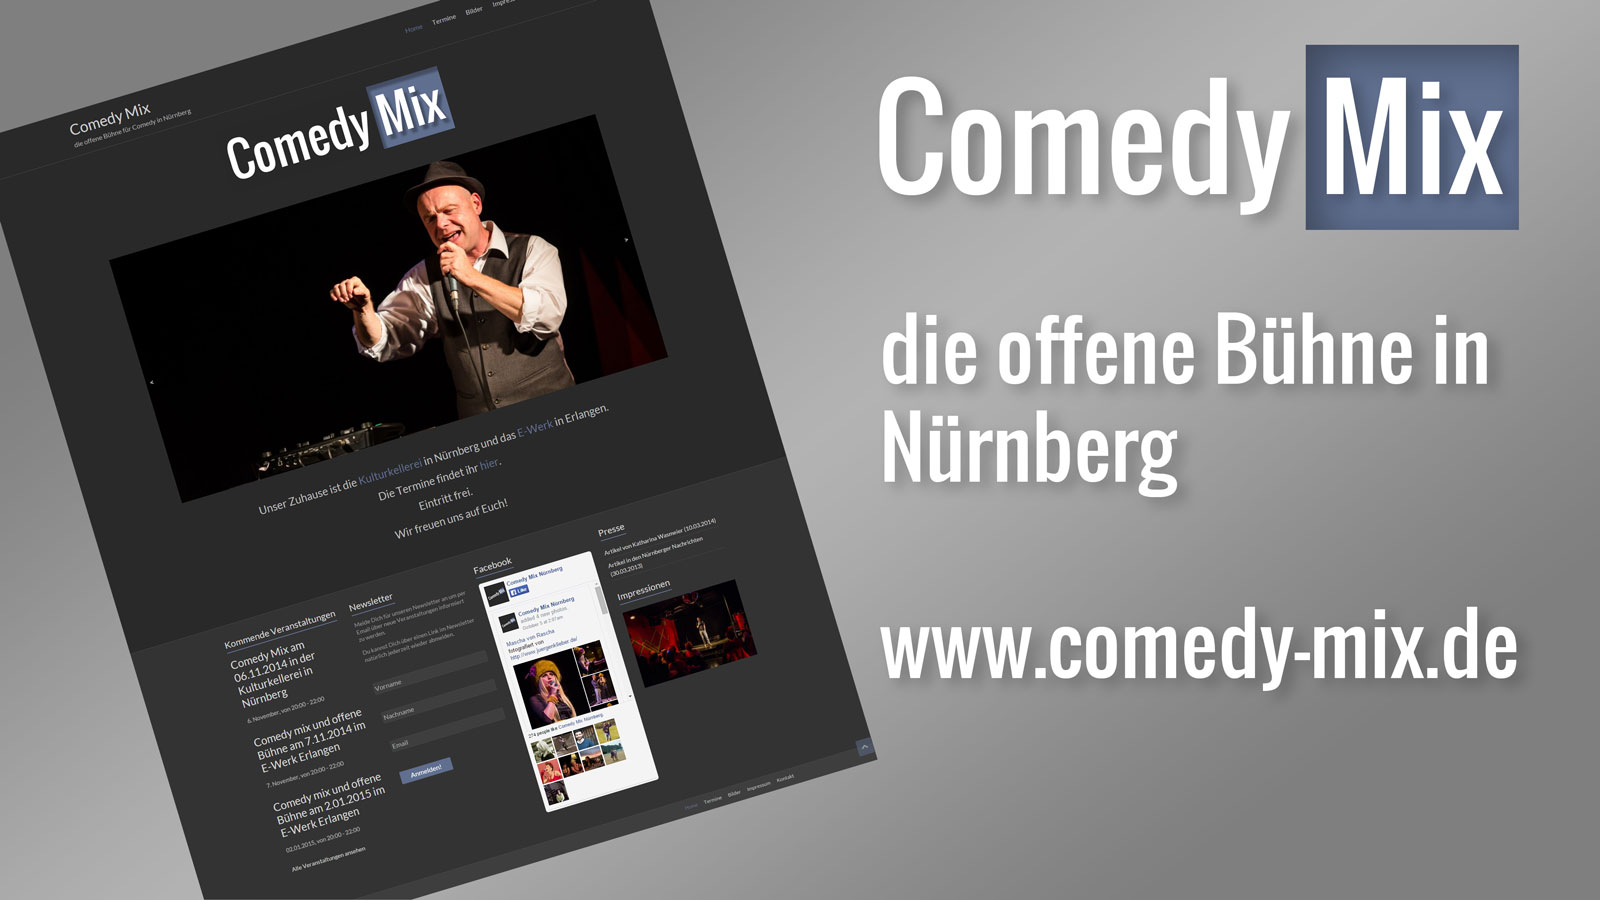 (c) Comedy-mix.de